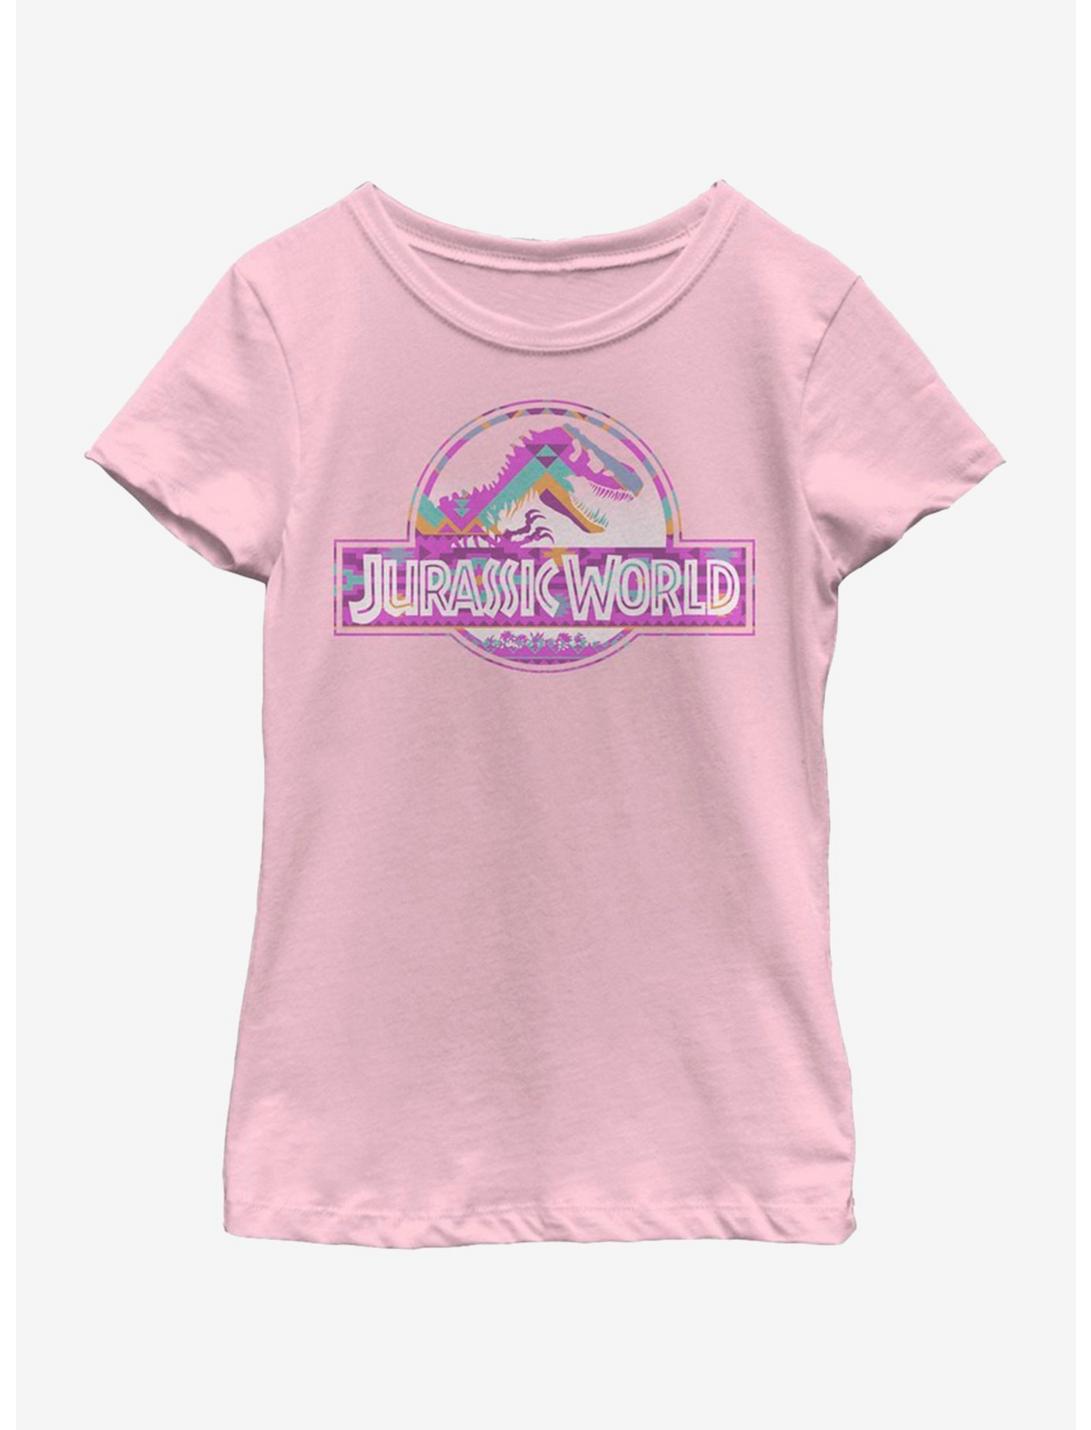 Jurassic World Geo Youth Girls T-Shirt, PINK, hi-res